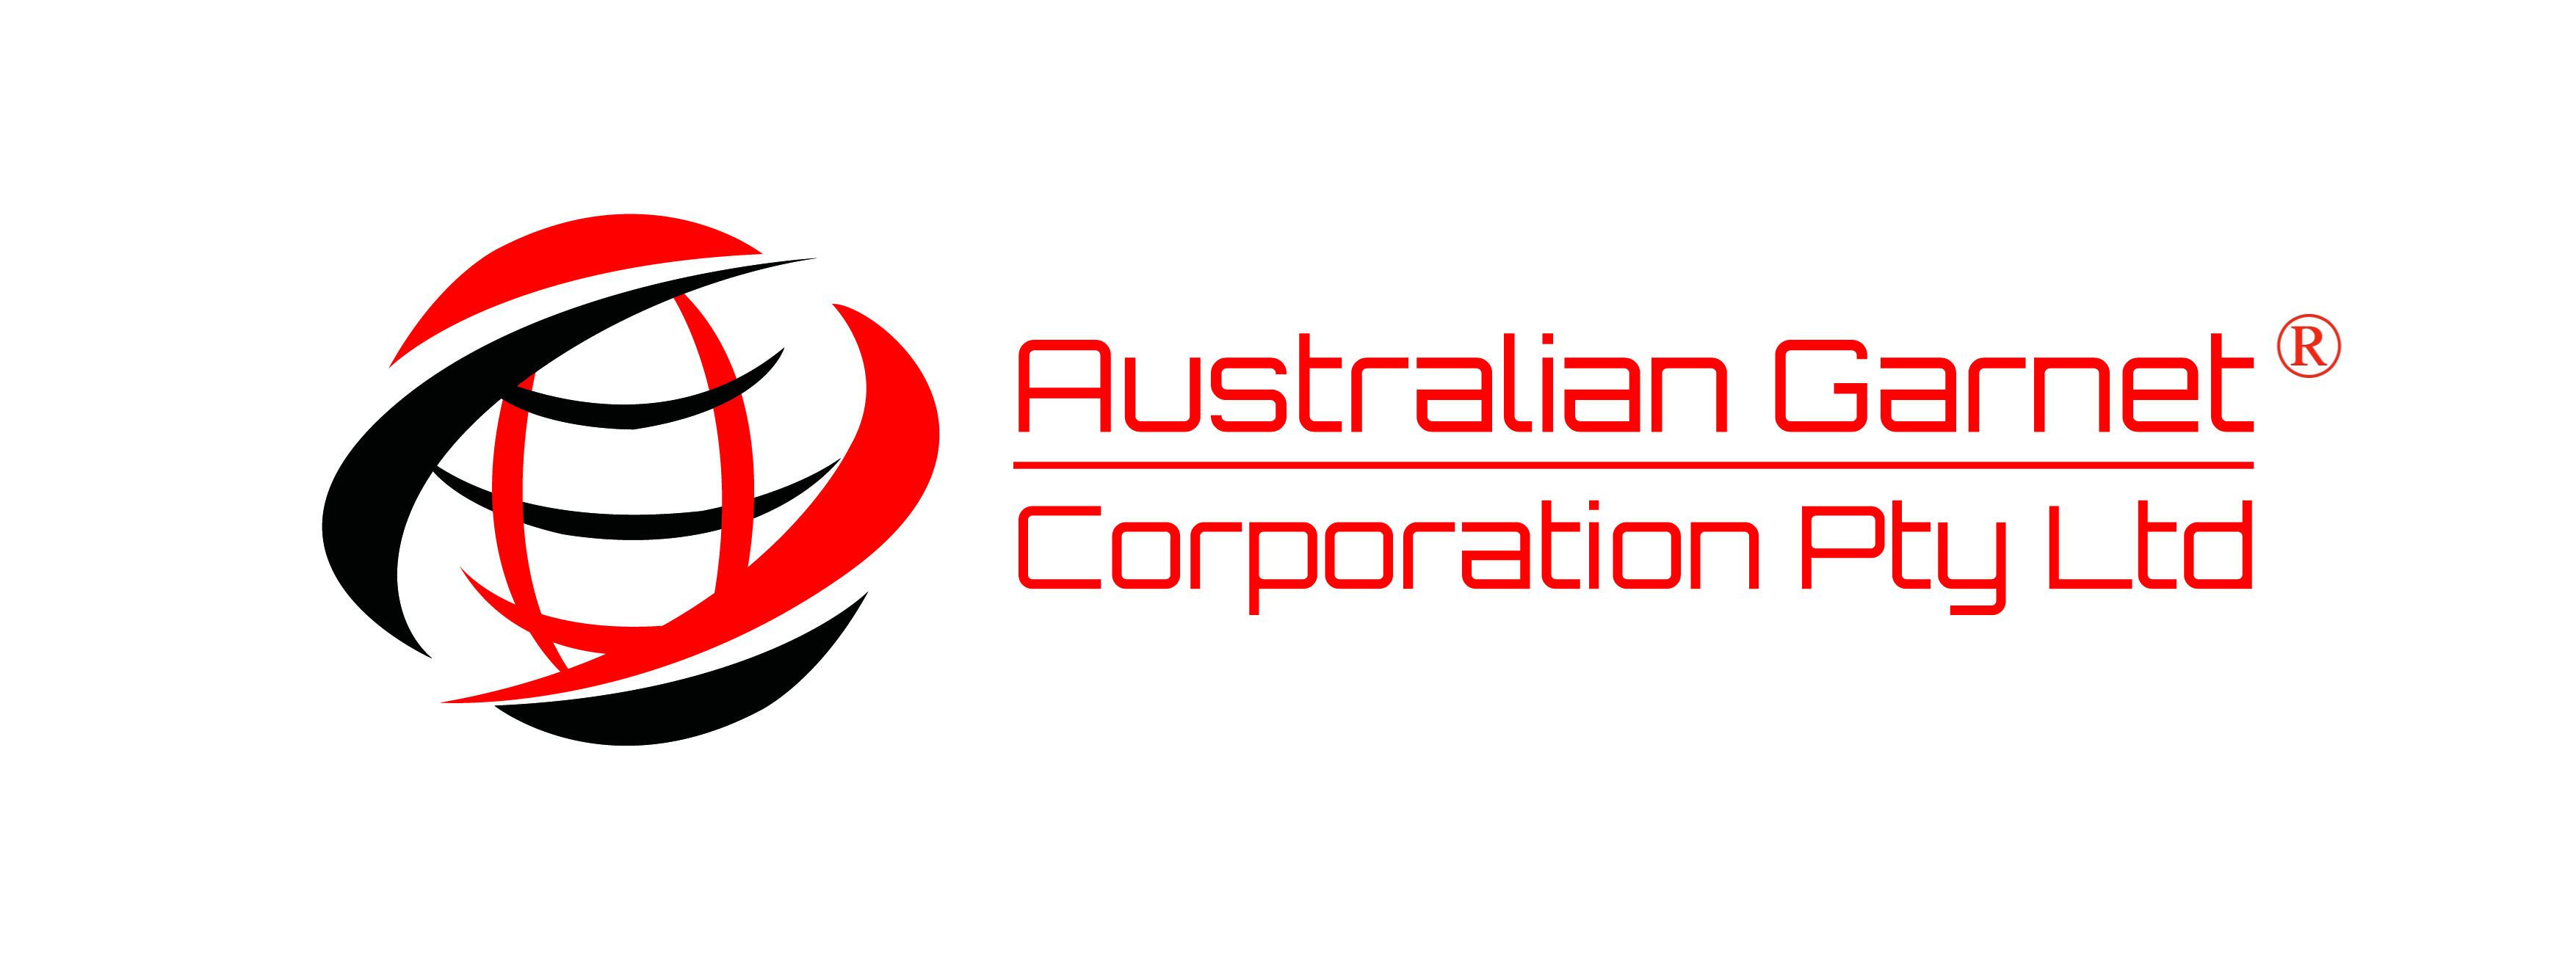 Australian Garnet Corporation™